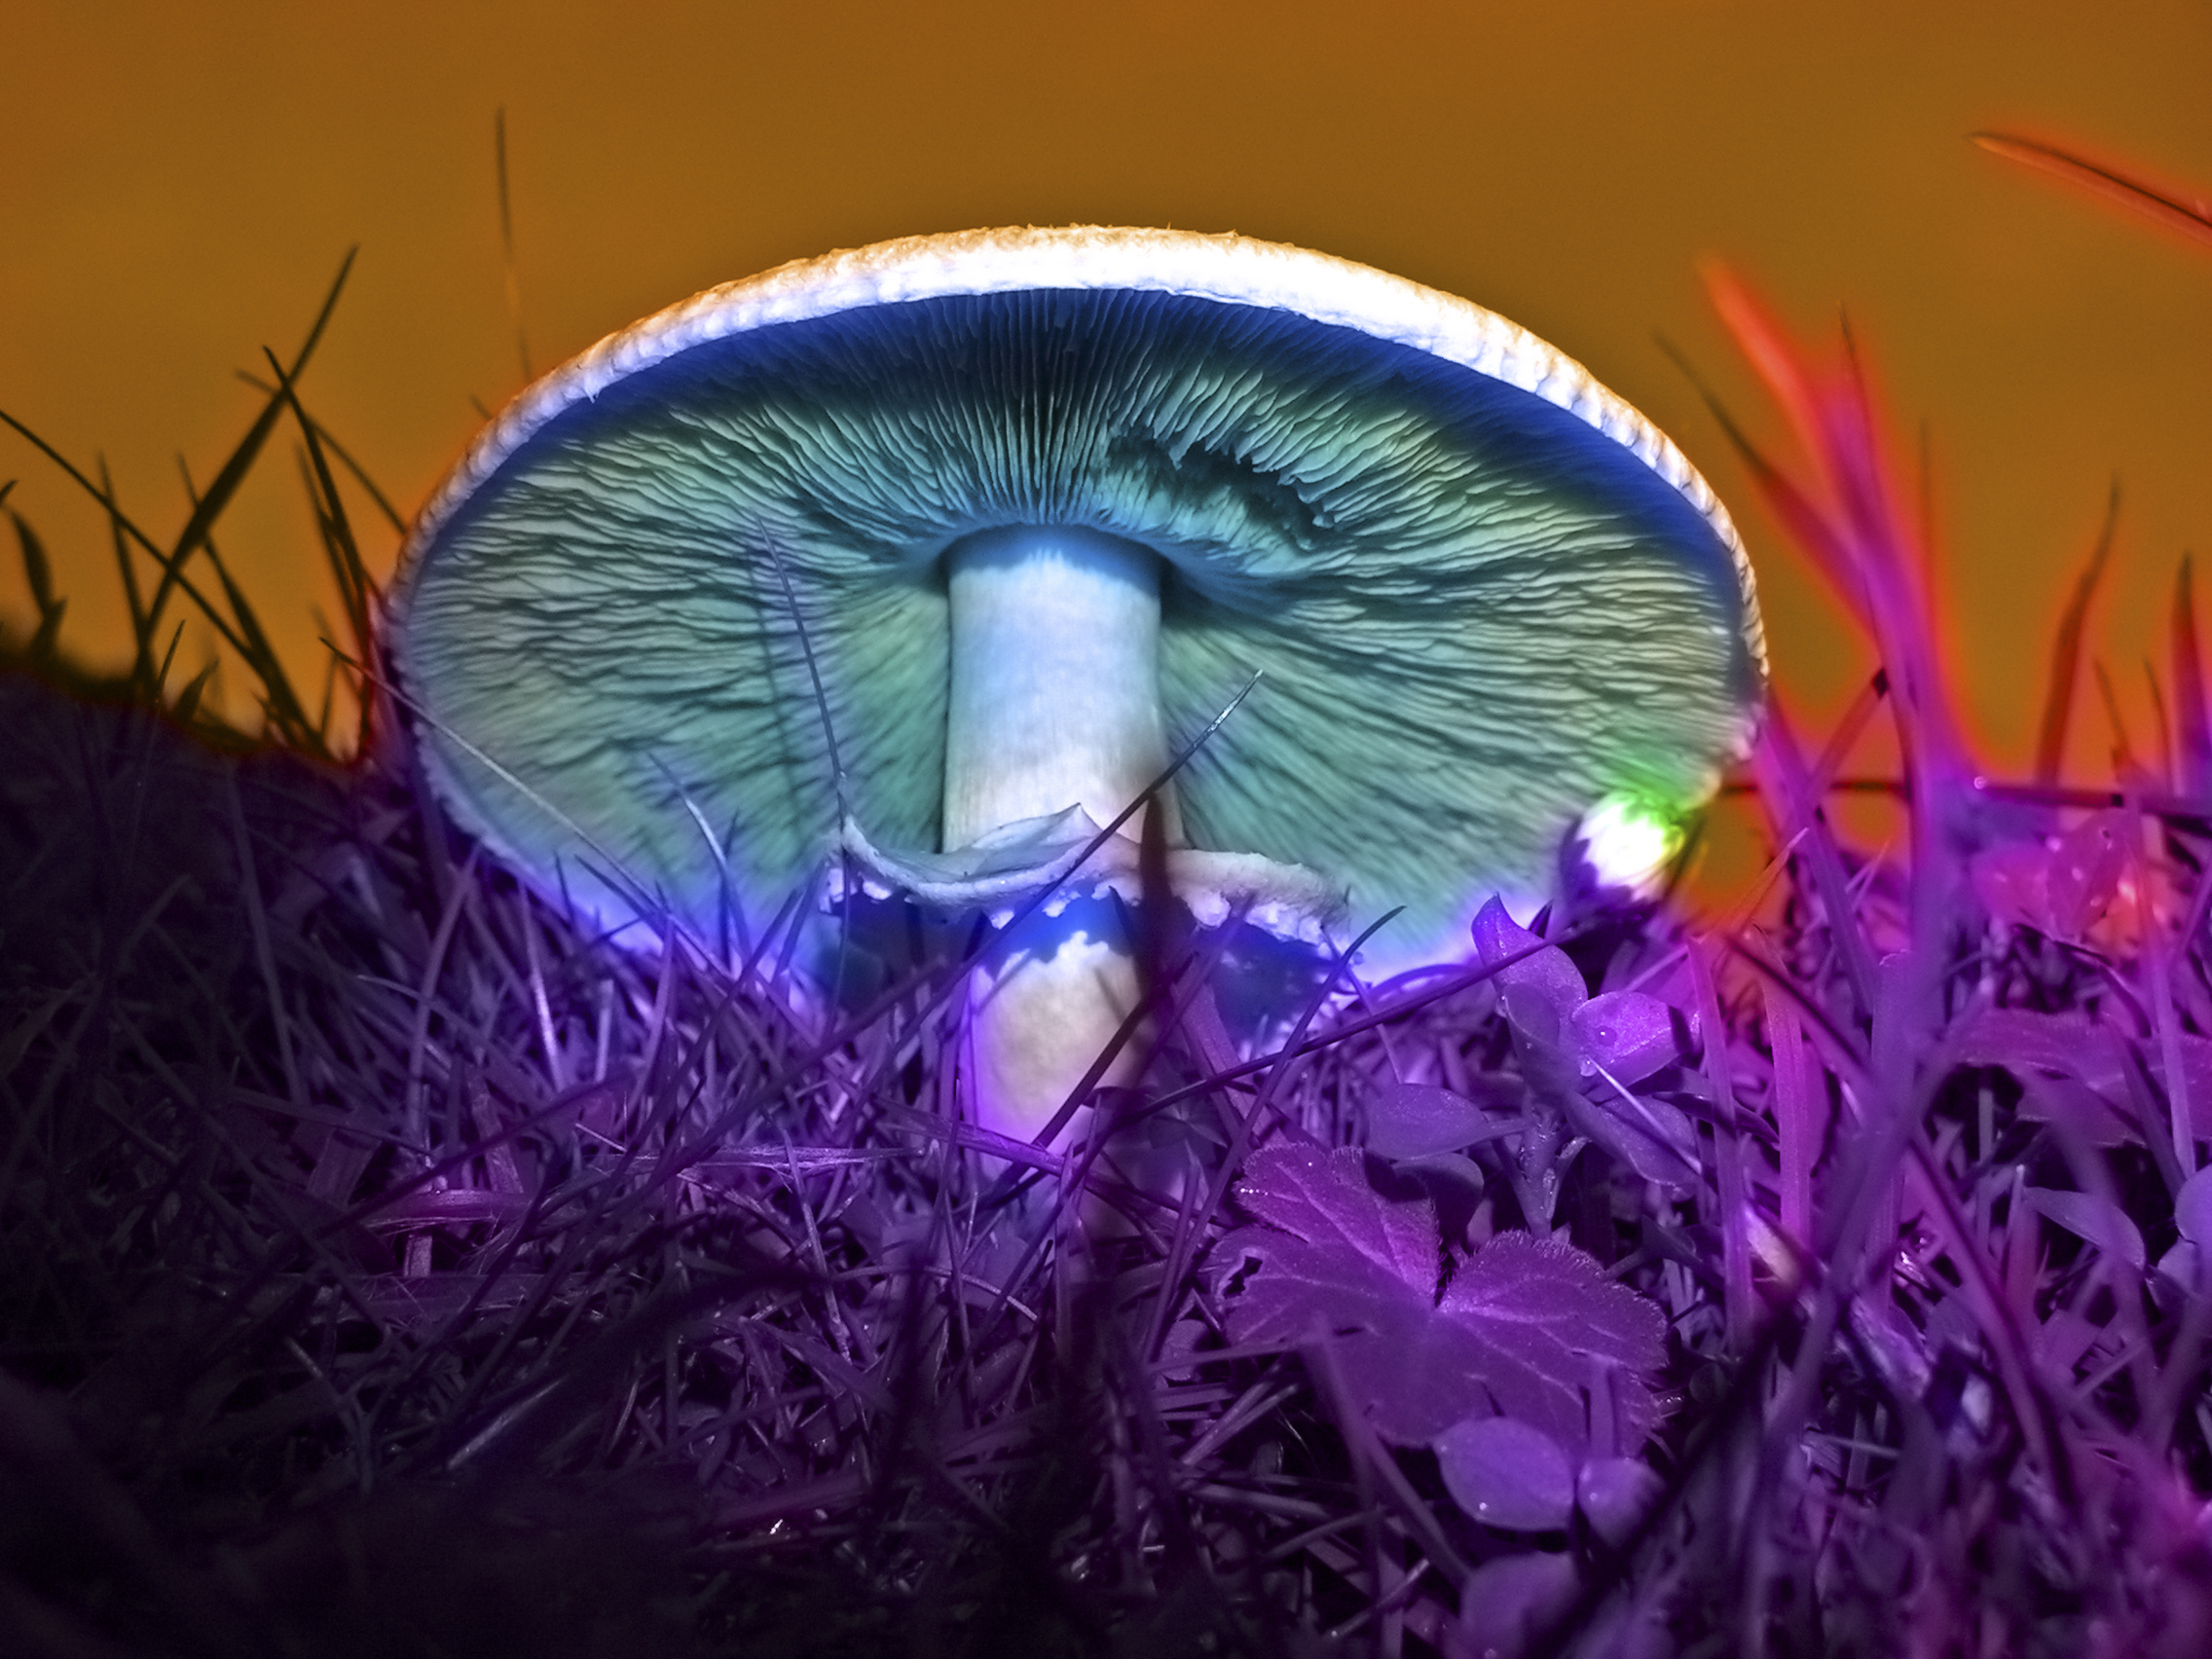 A mushroom-derived compound that may treat depression like magic